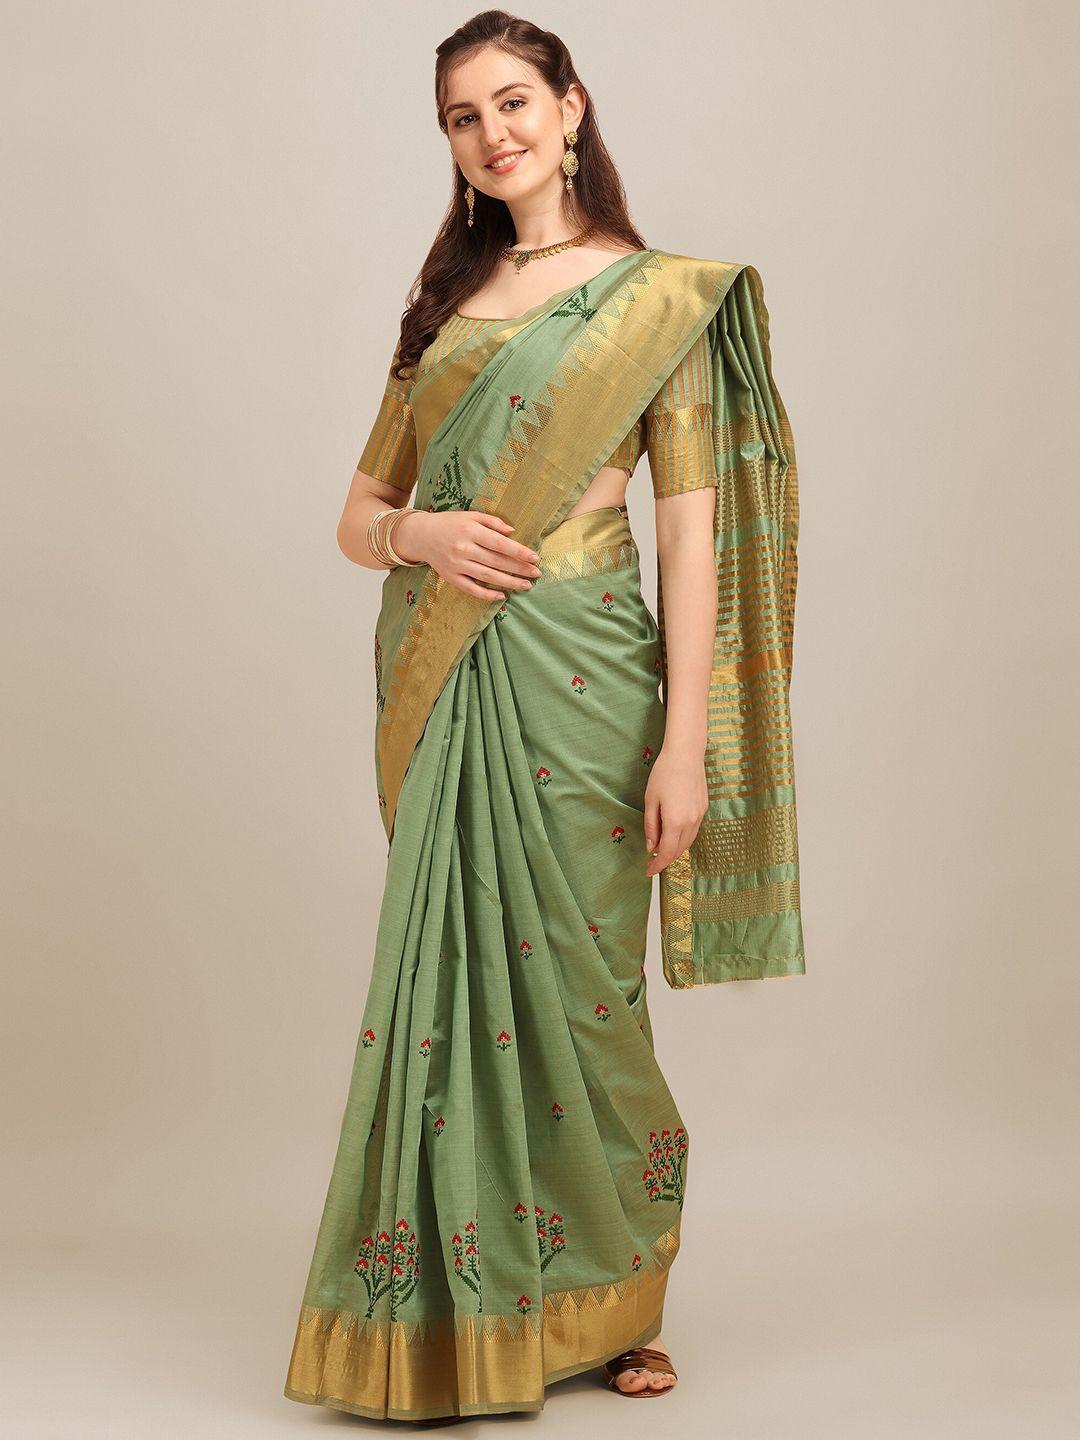 mitera green & gold-toned floral embroidered silk cotton banarasi saree